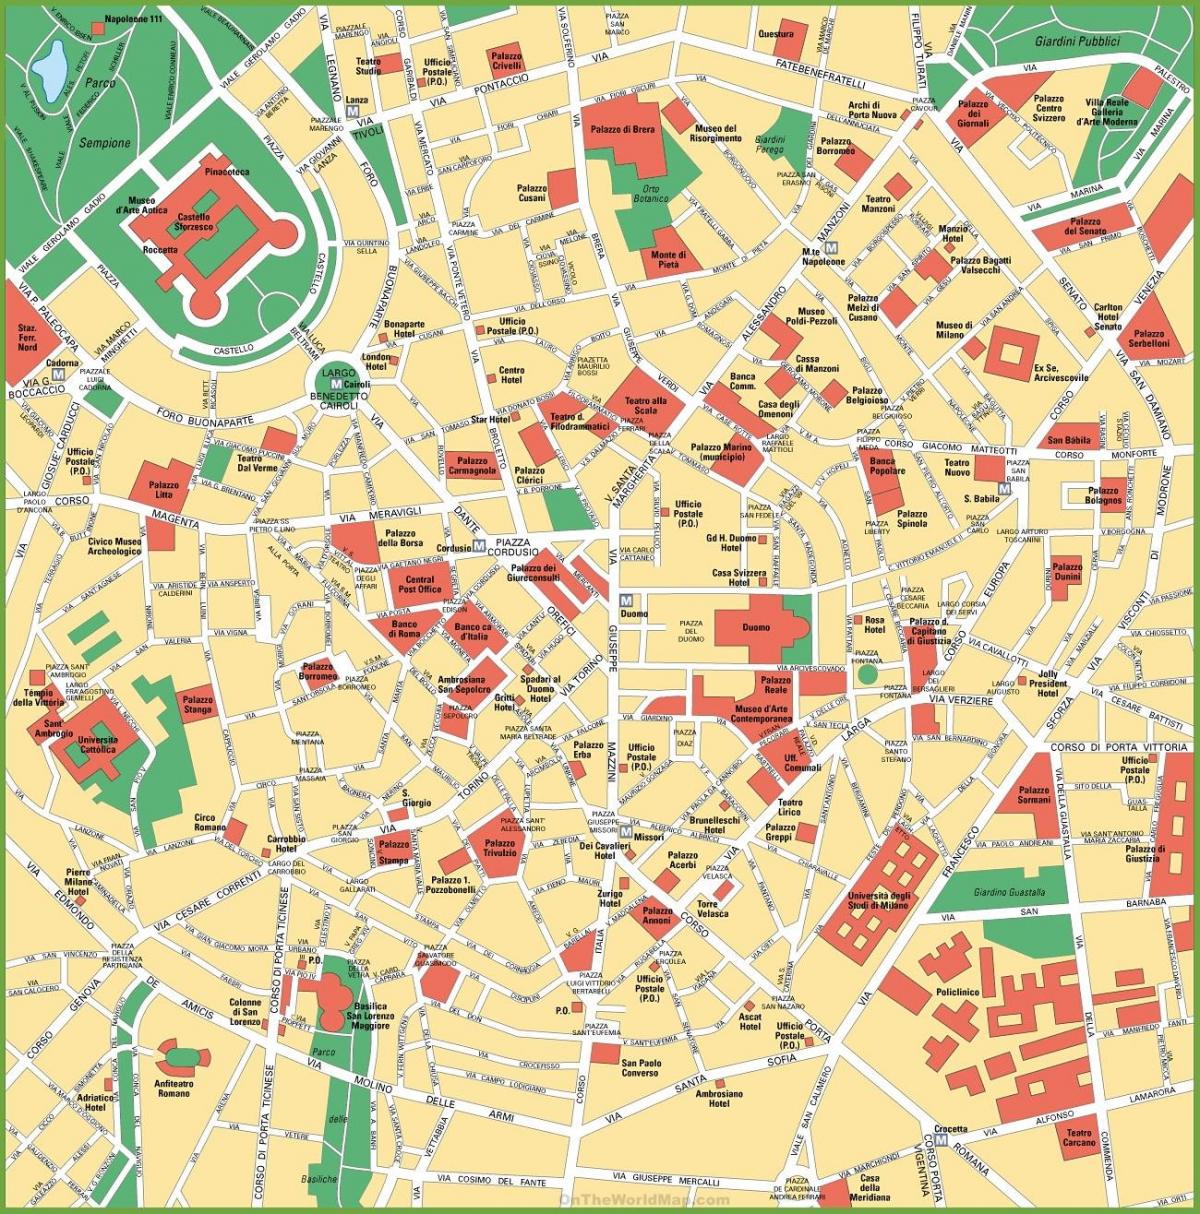 milano city center kaart